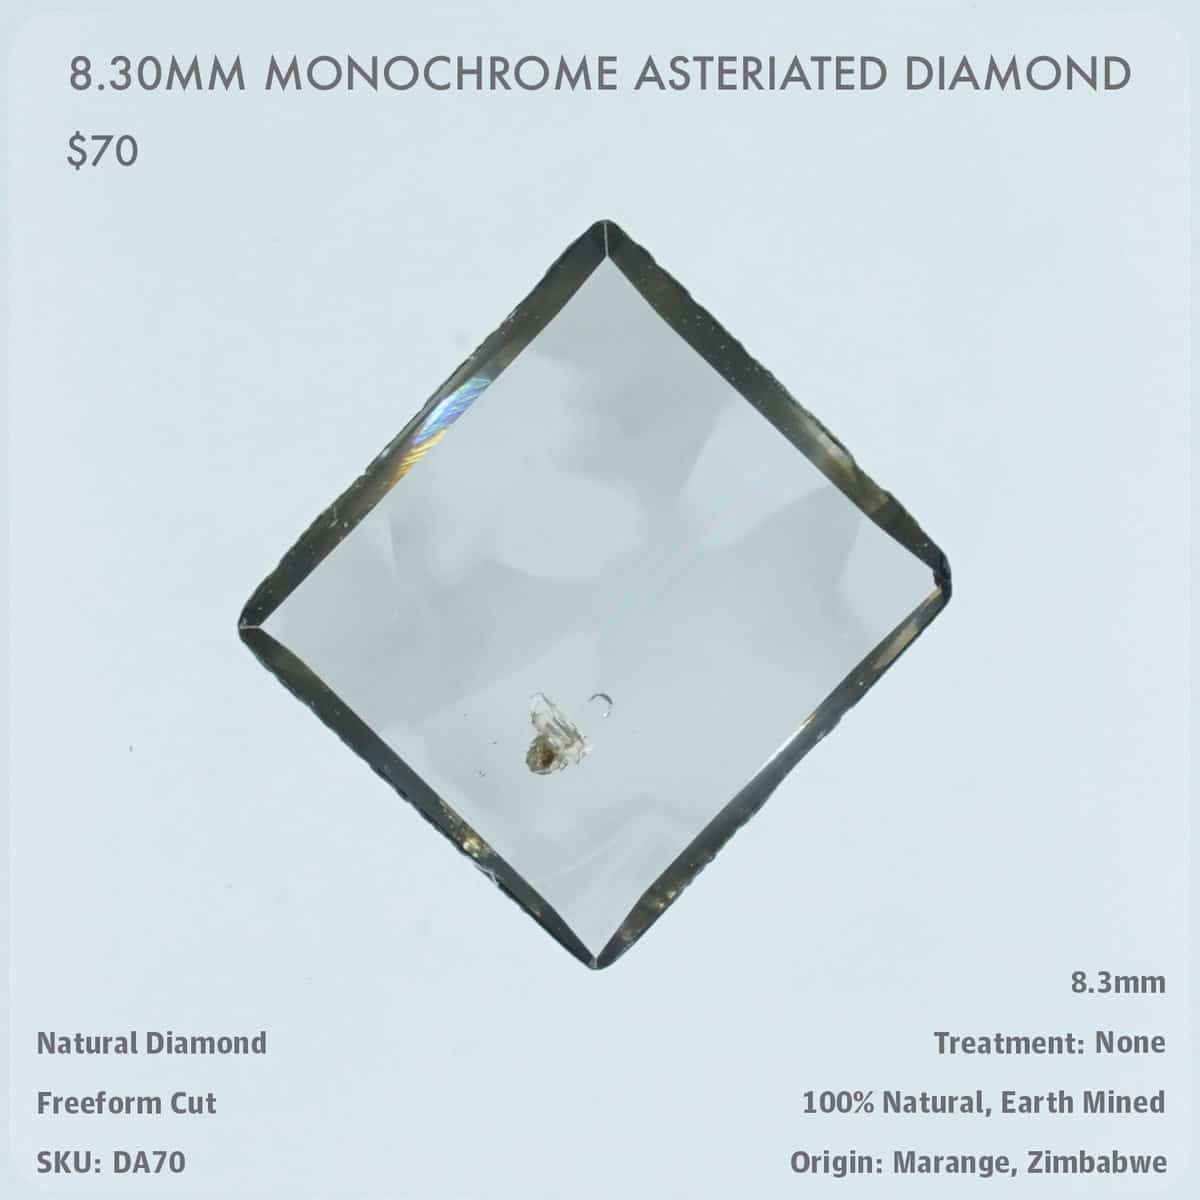 8.30mm Monochrome Asteriated Diamond